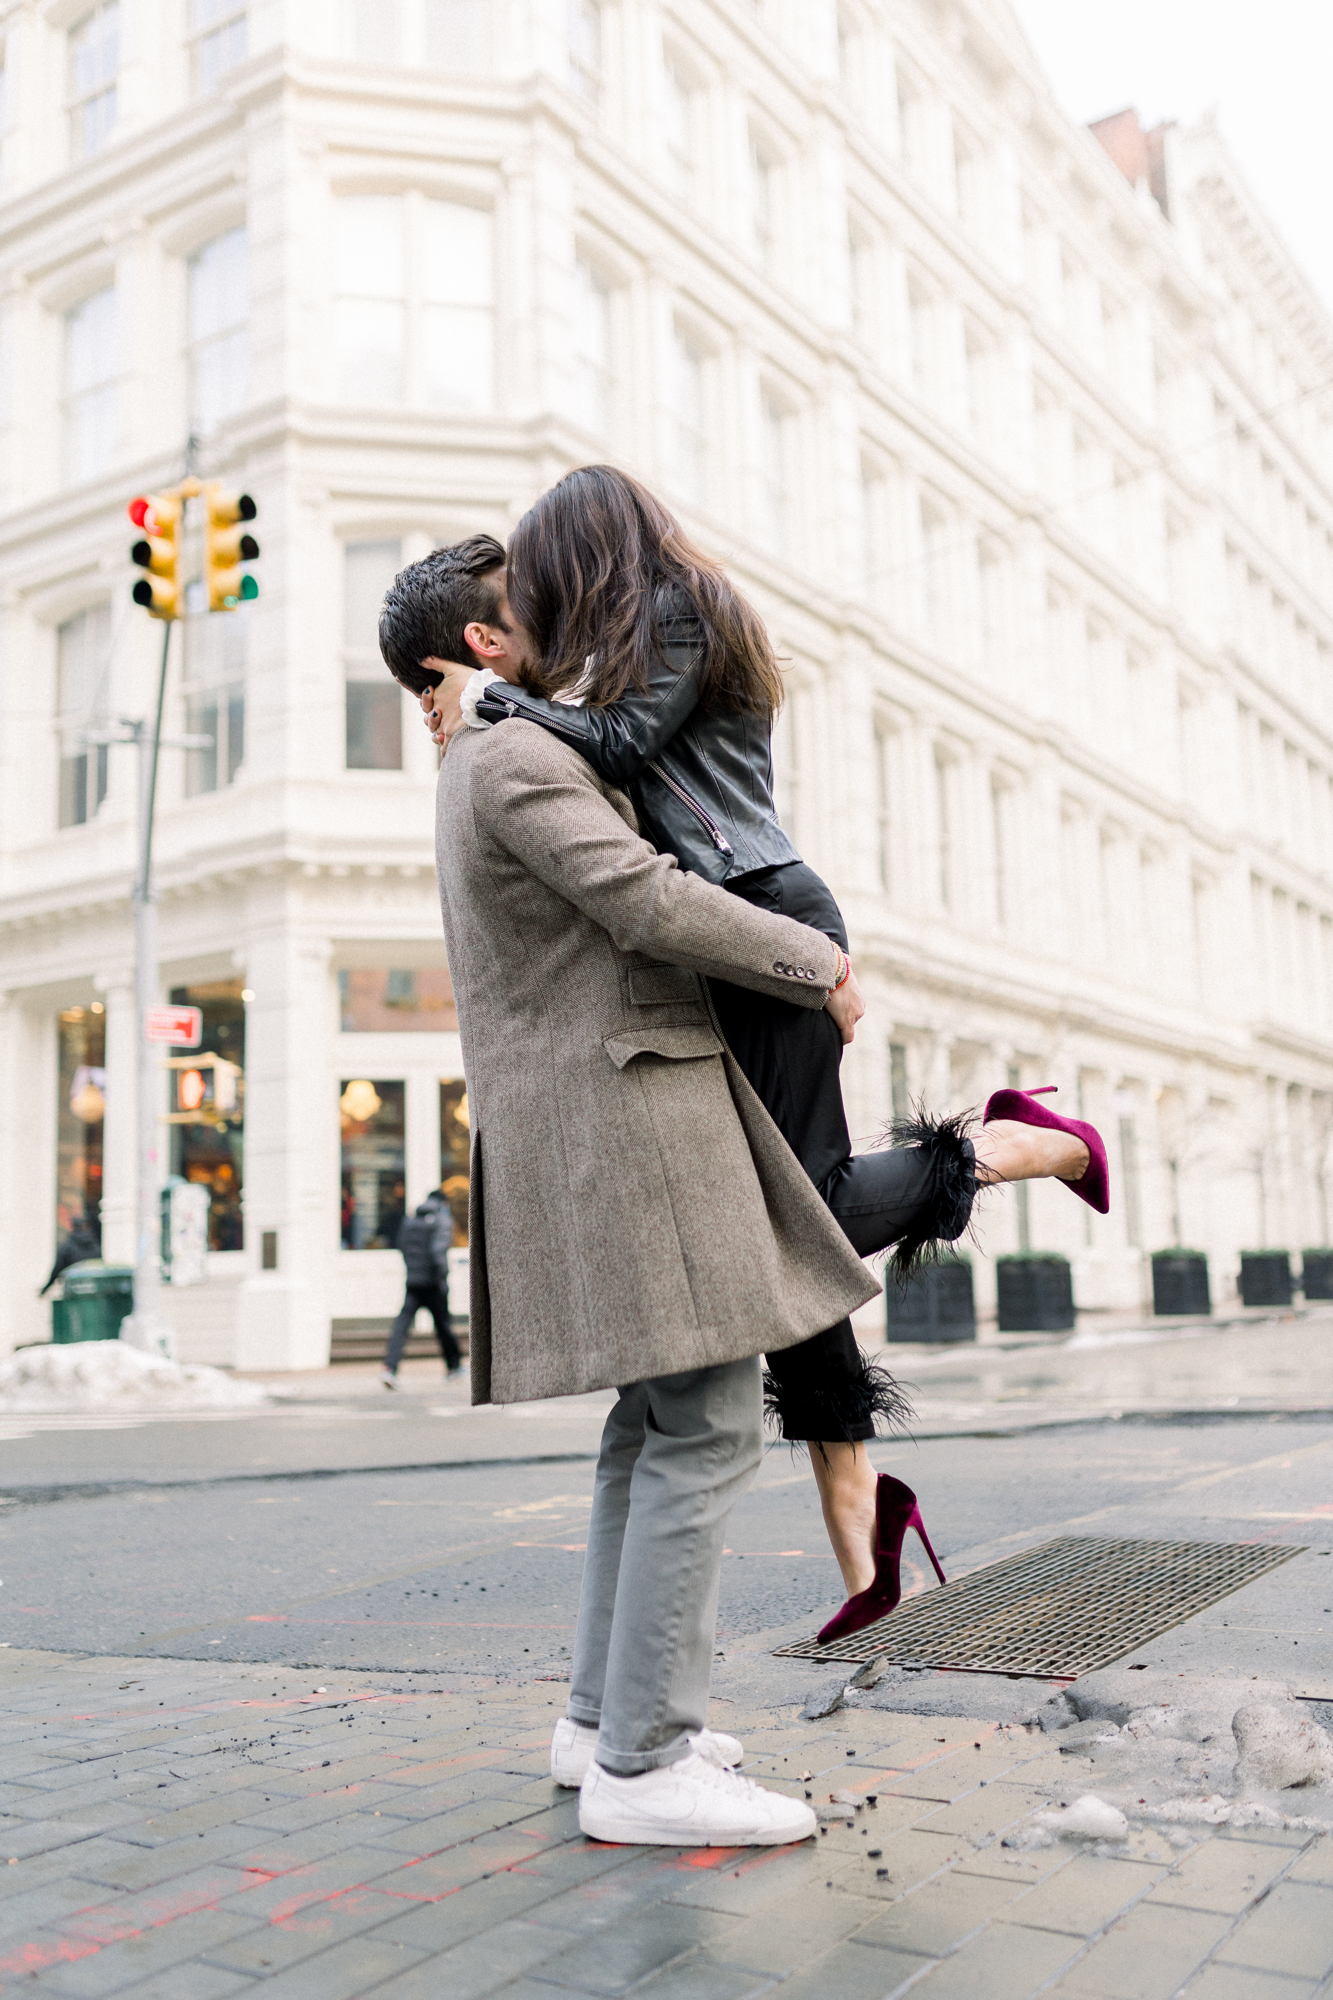 Eye-catching Engagement Photos in Rainy Soho New York